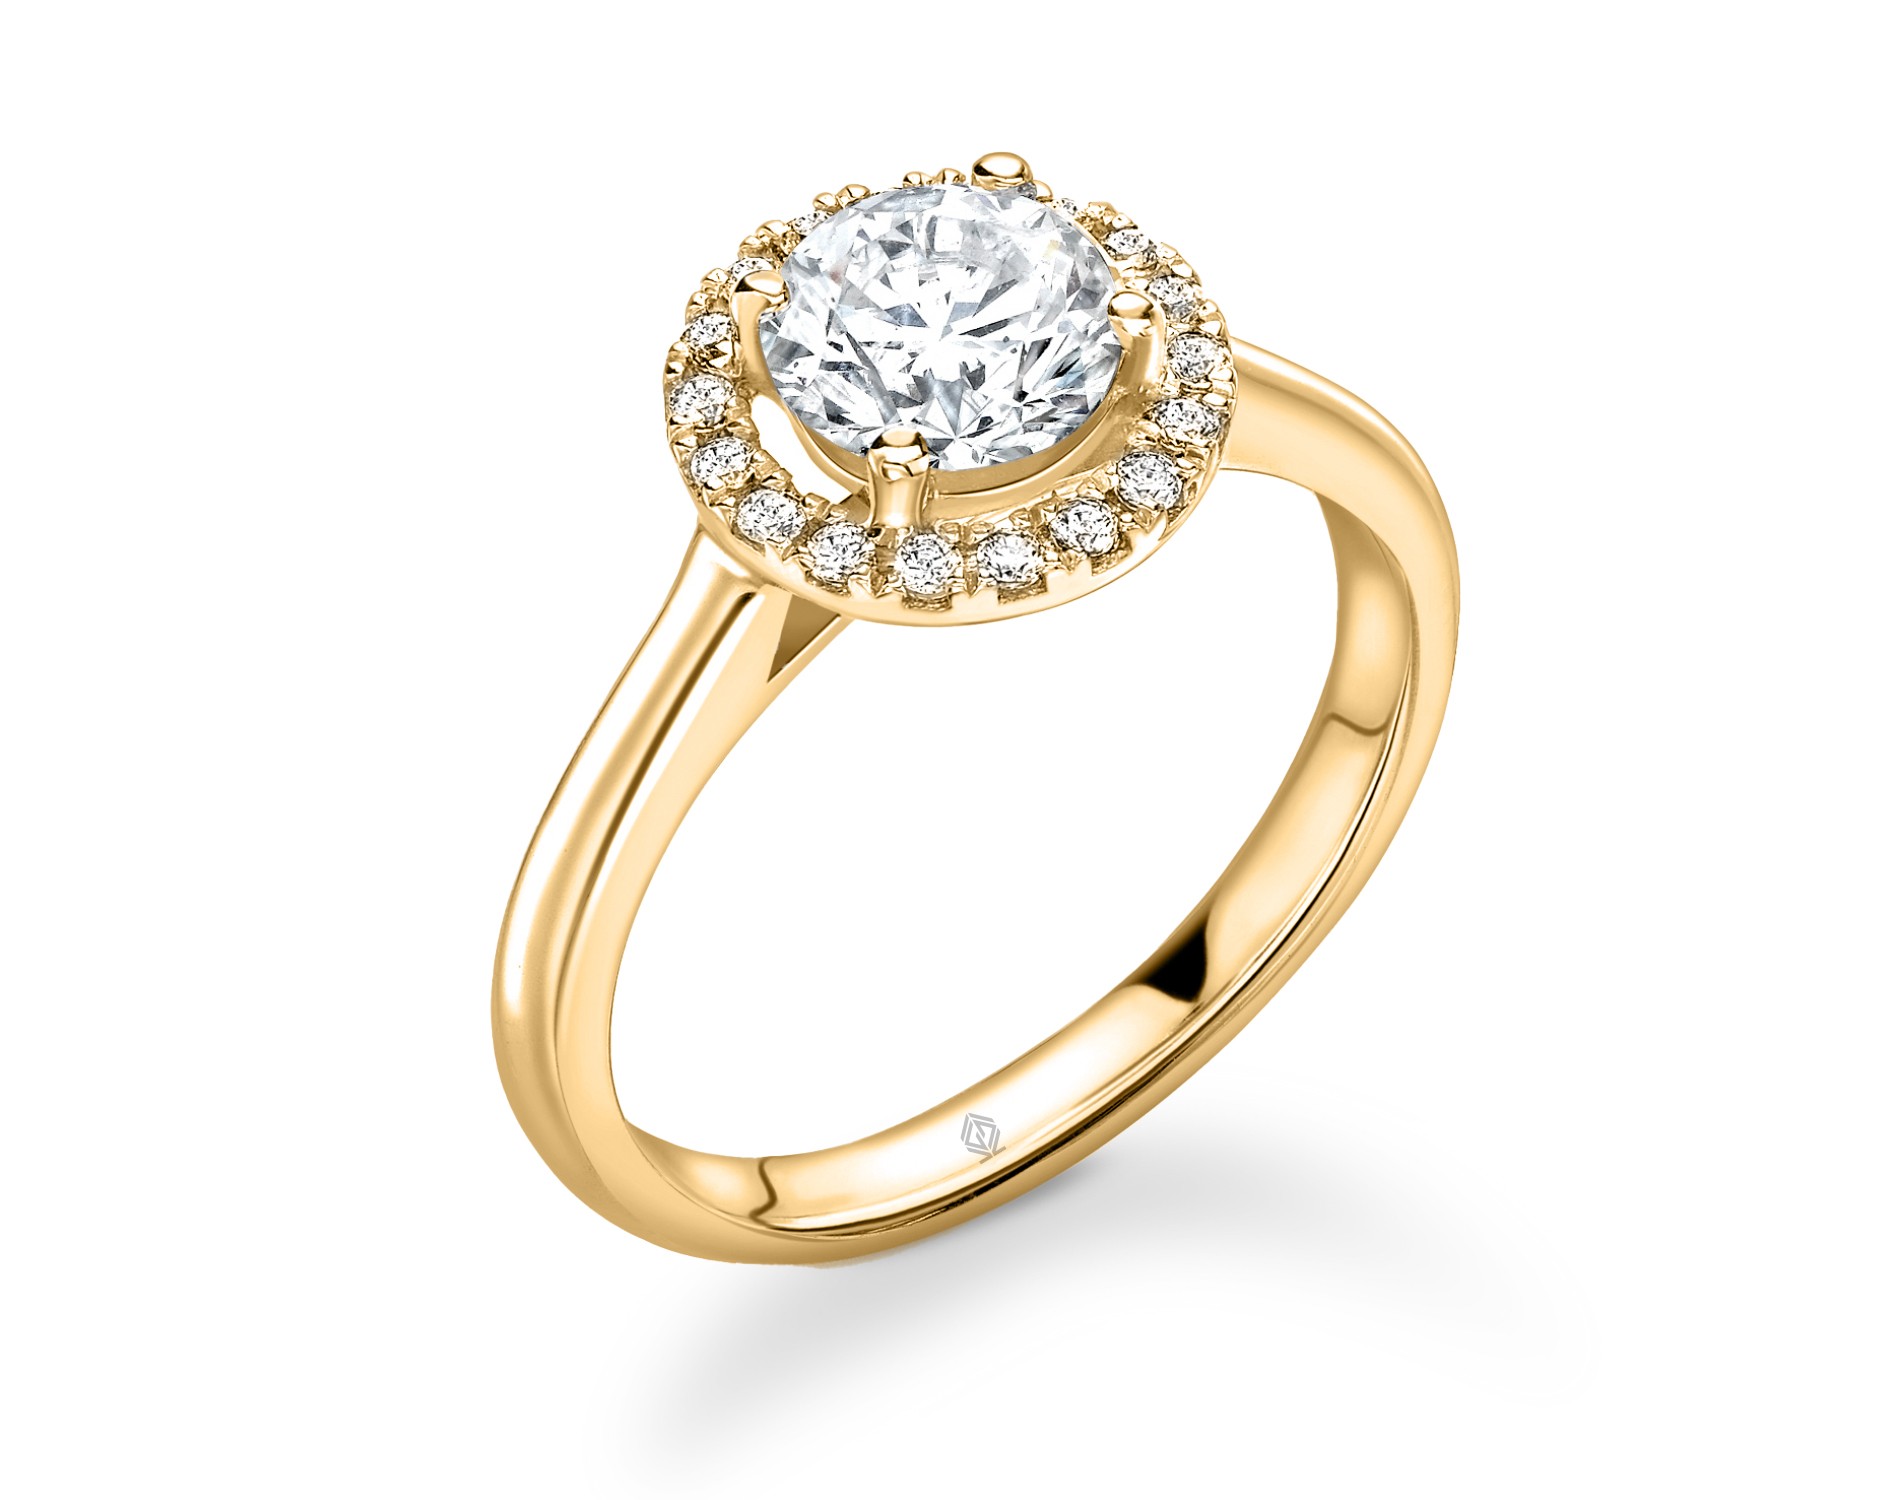 18K YELLOW GOLD ROUND CUT HALO DIAMOND ENGAGEMENT RING